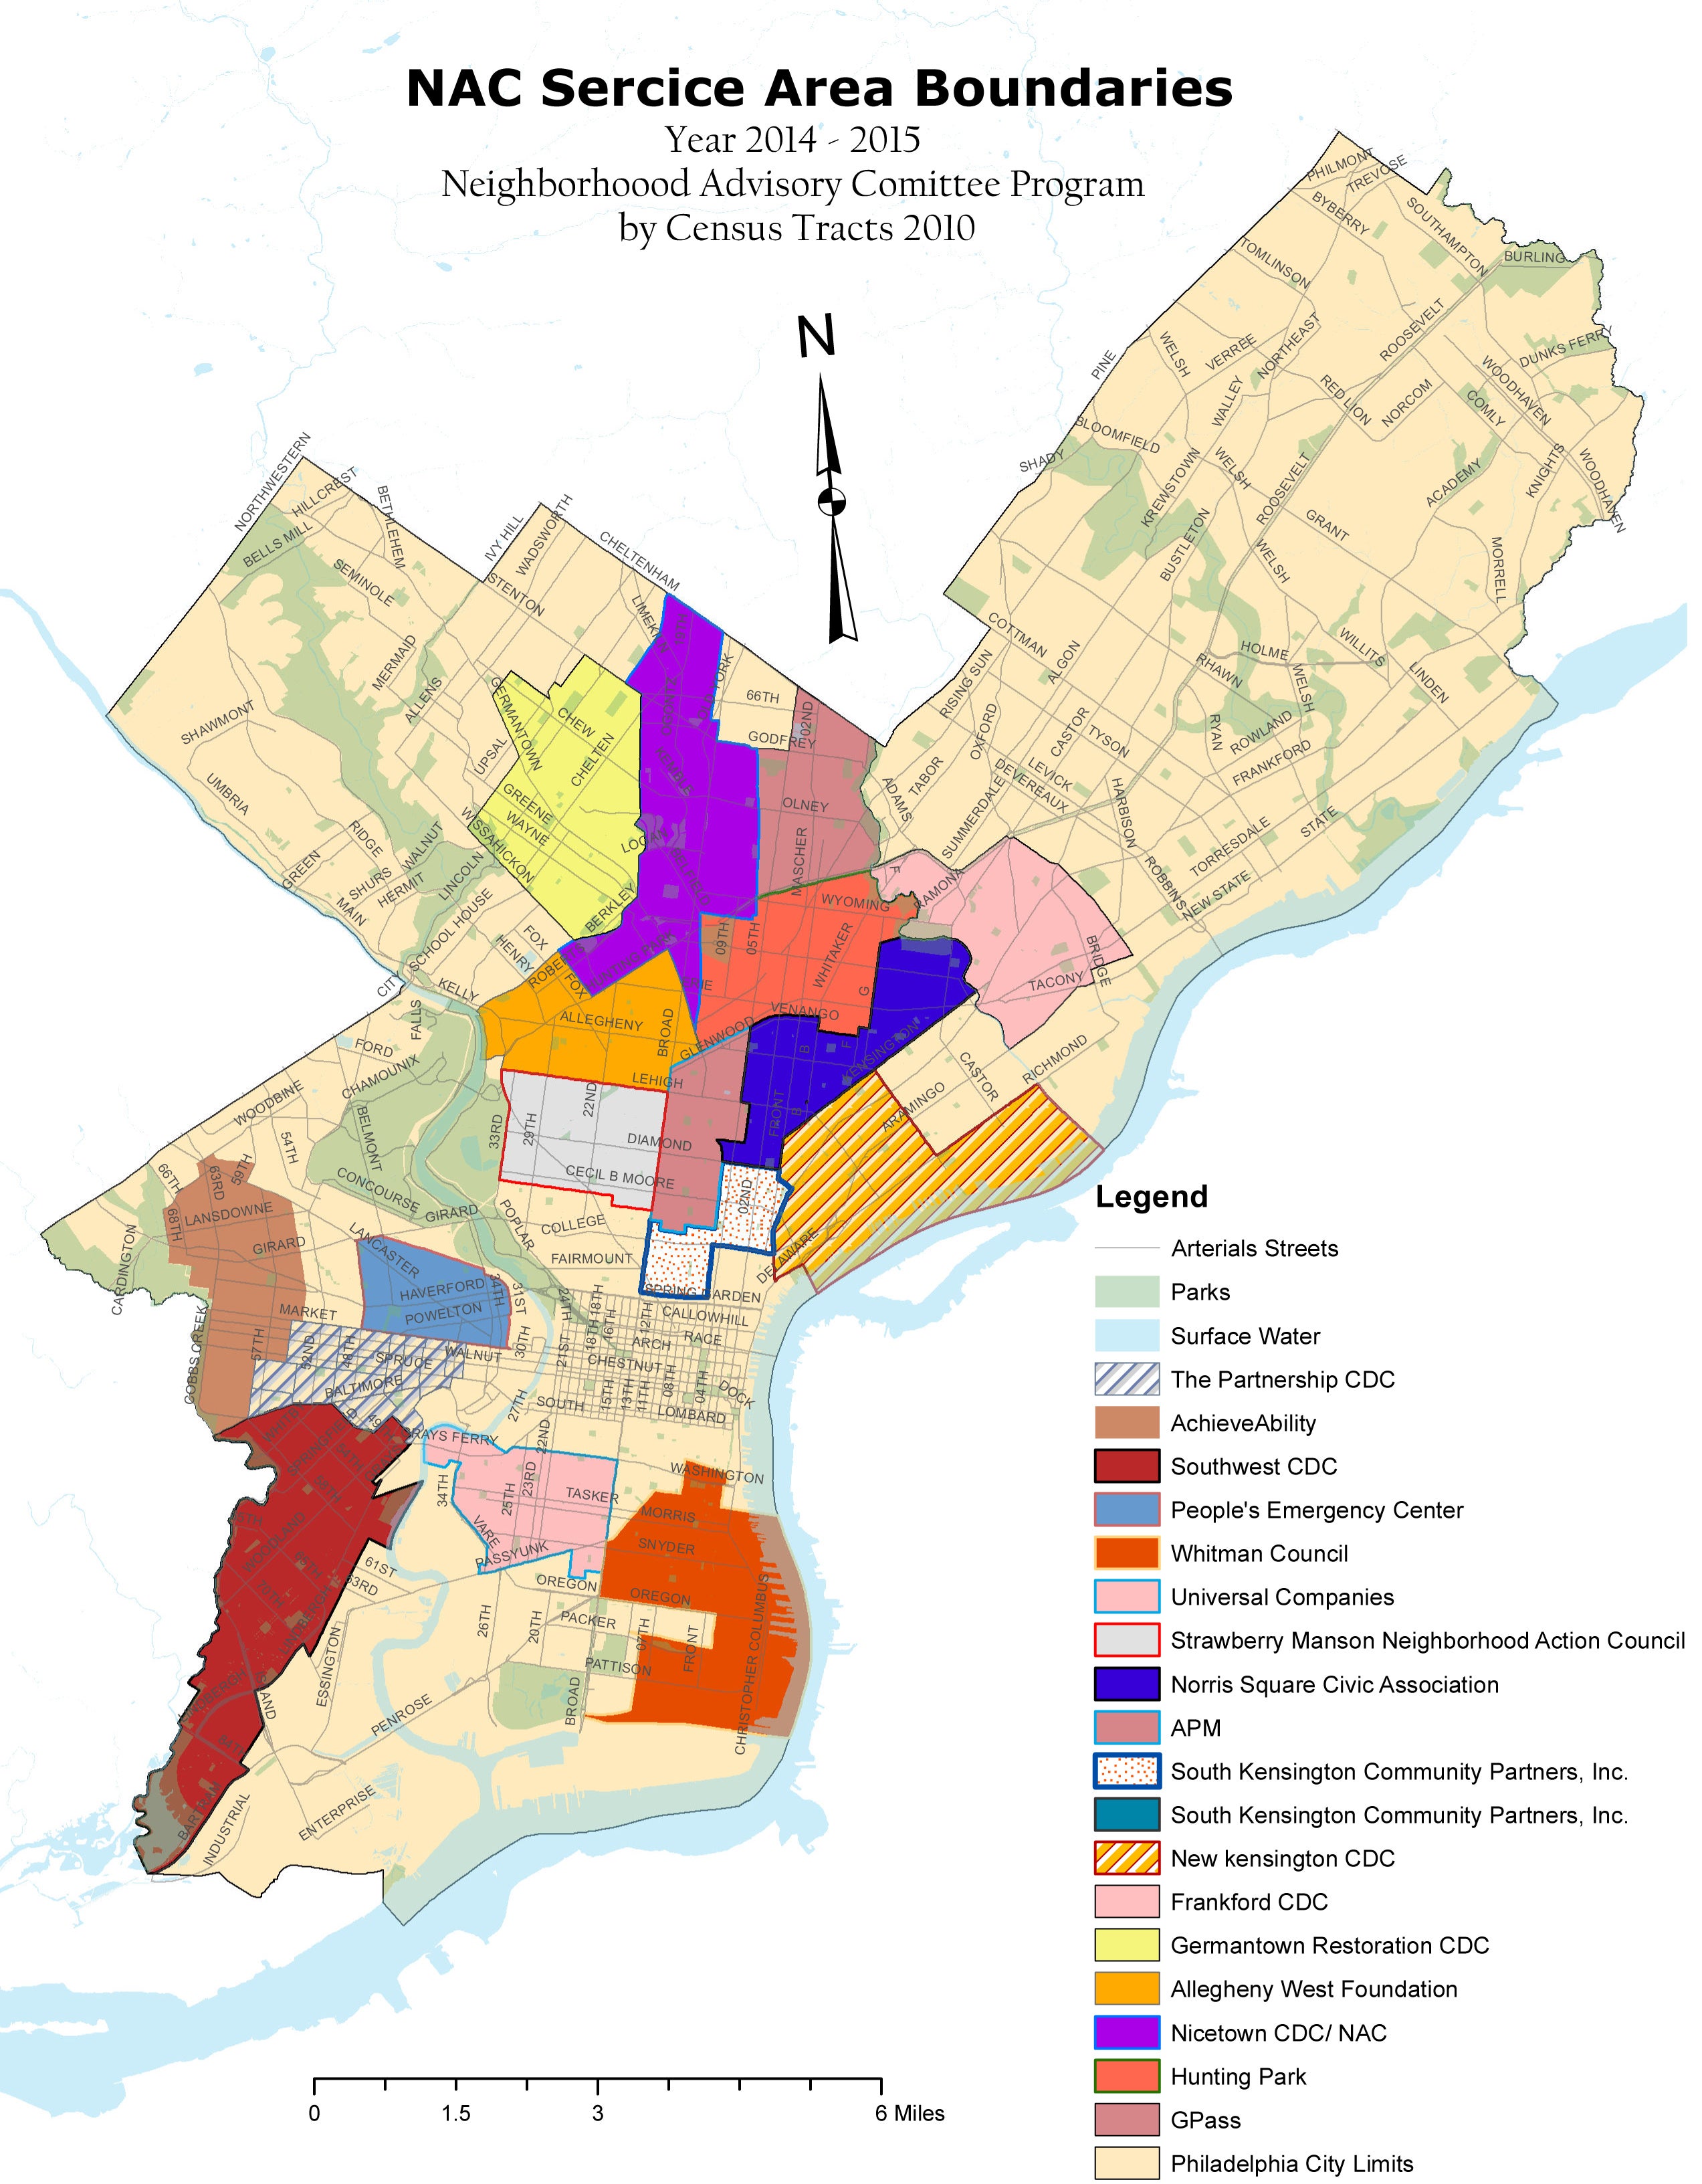 2014-15 NAC service area boundaries